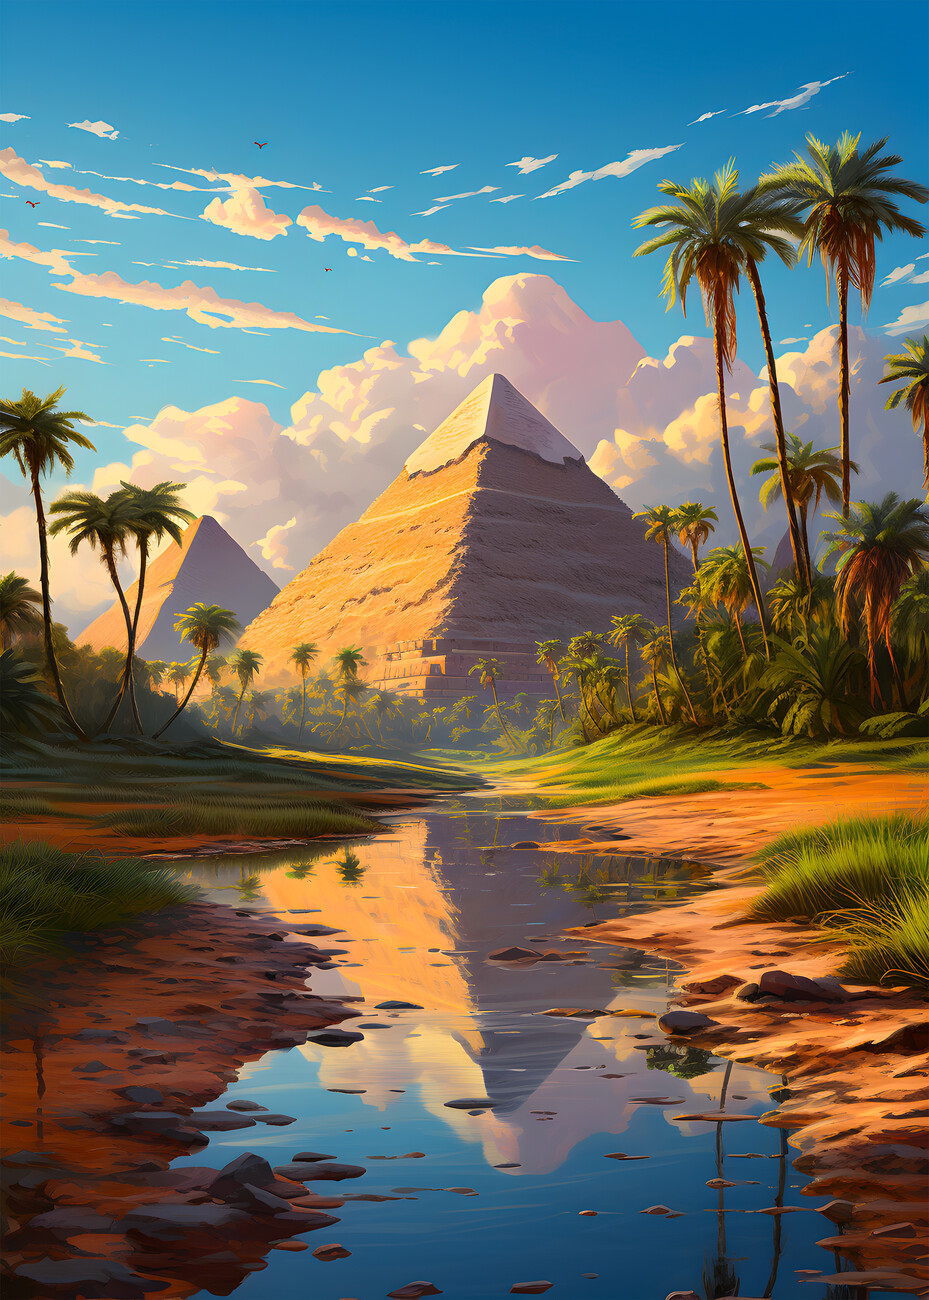 Wall Art Print | Egypt - Pyramids of Giza | Europosters